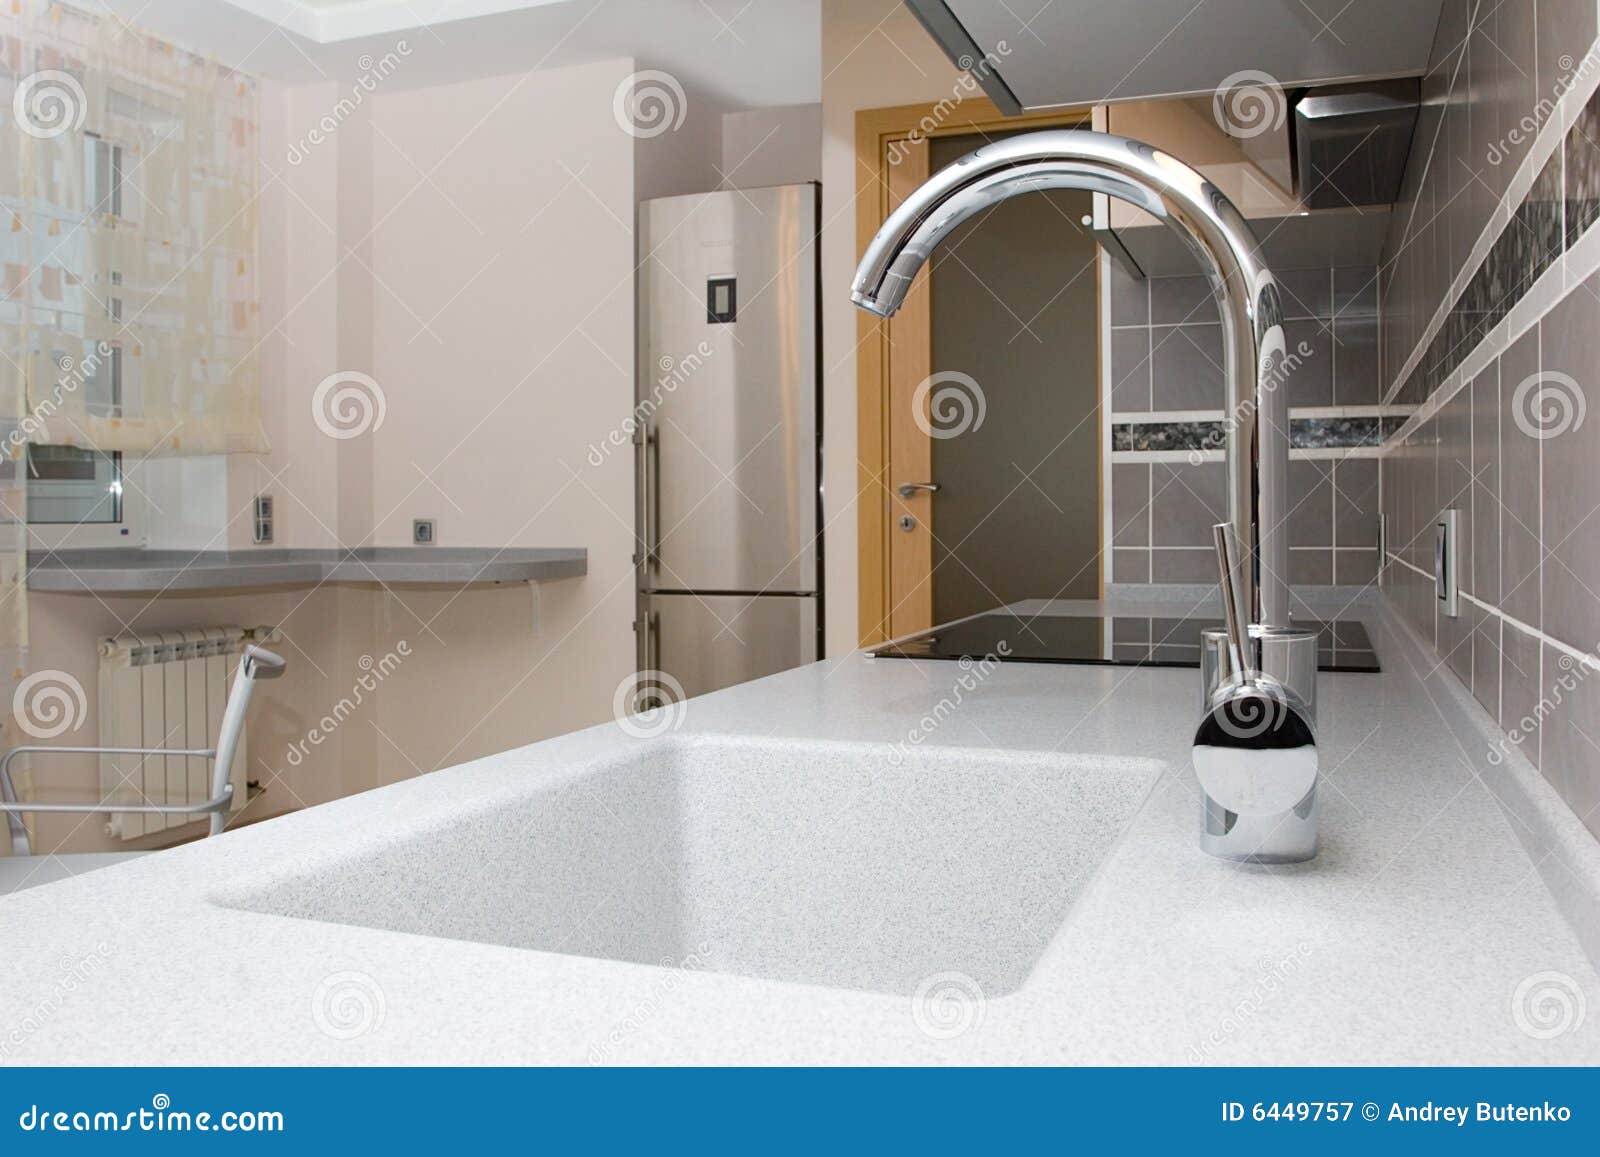 Modern kitchen interior stock image. Image of furniture - 6449757